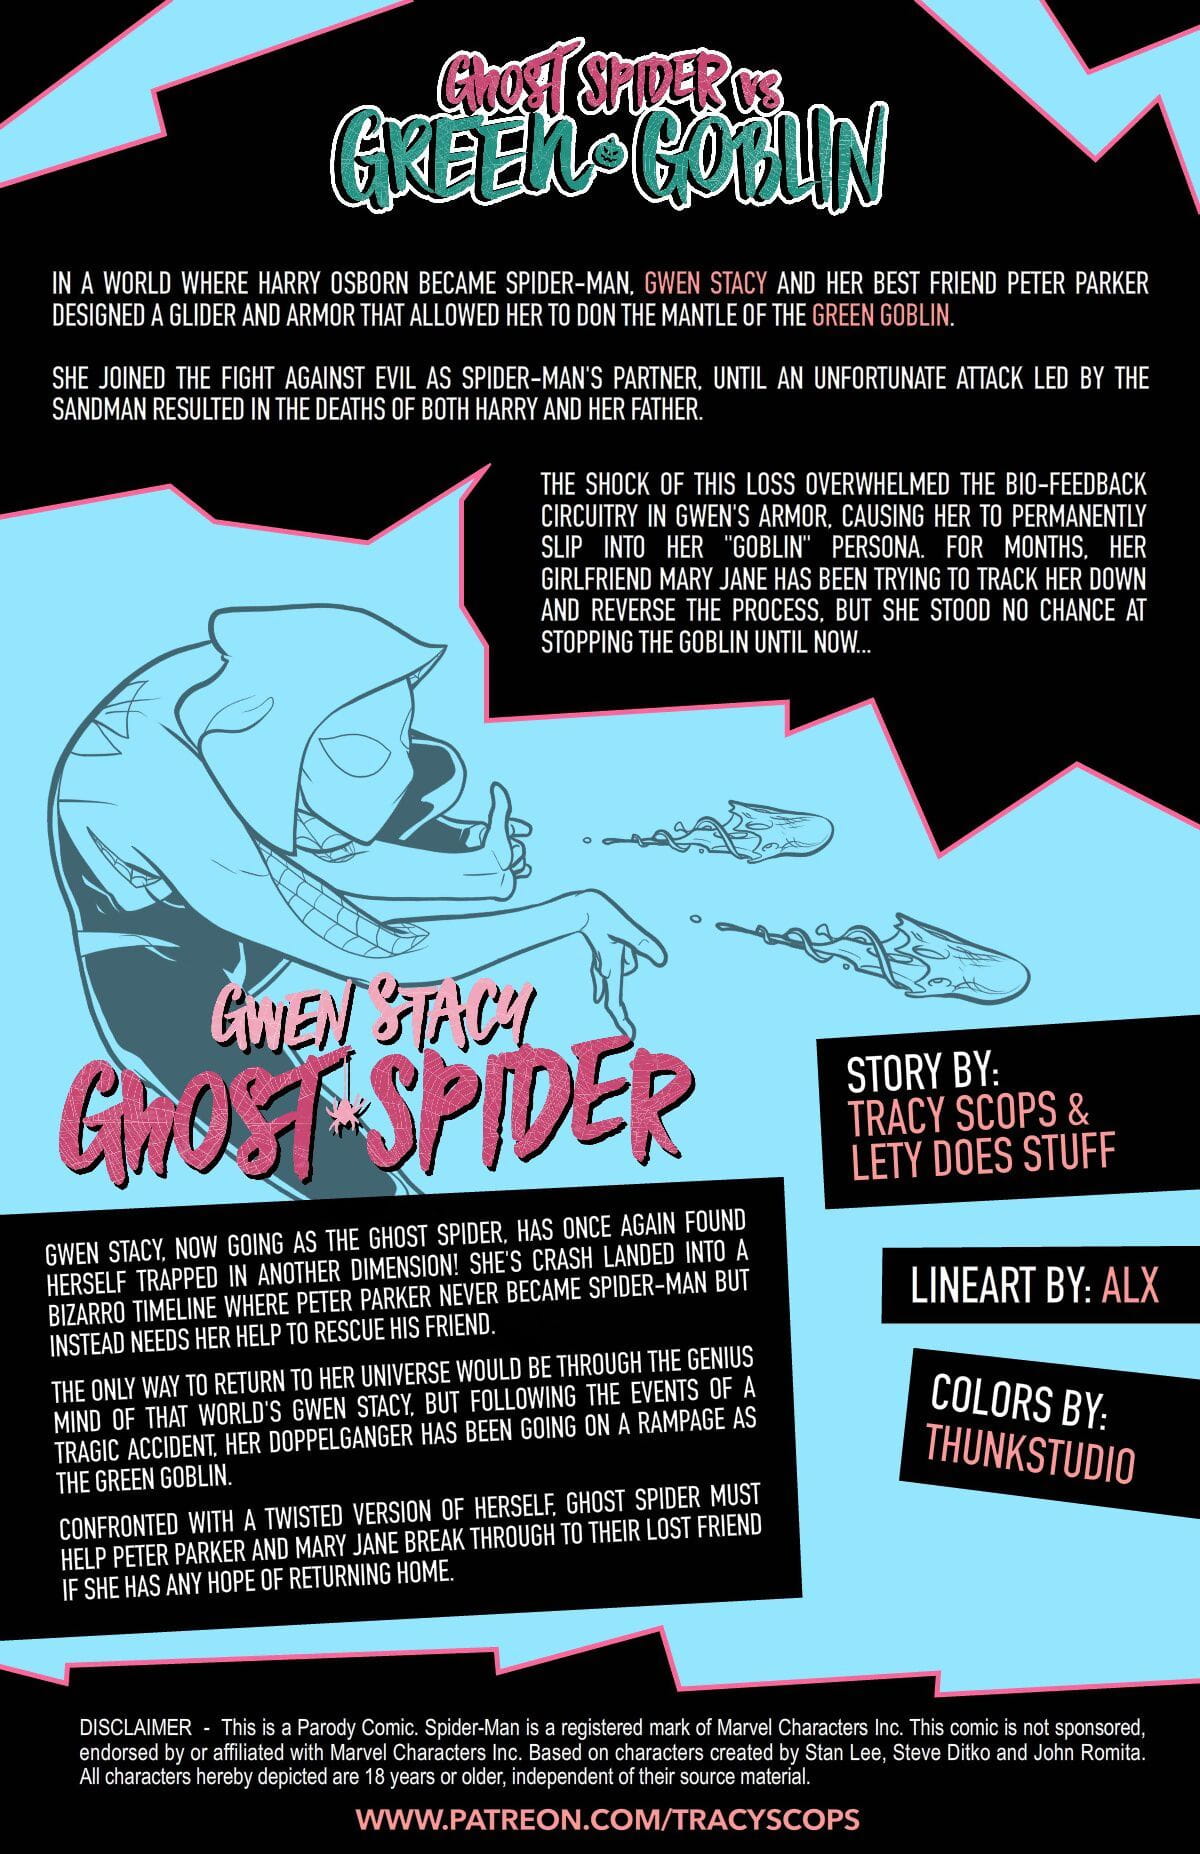 Tracy scops ghost spider vs. grün kobold page 1